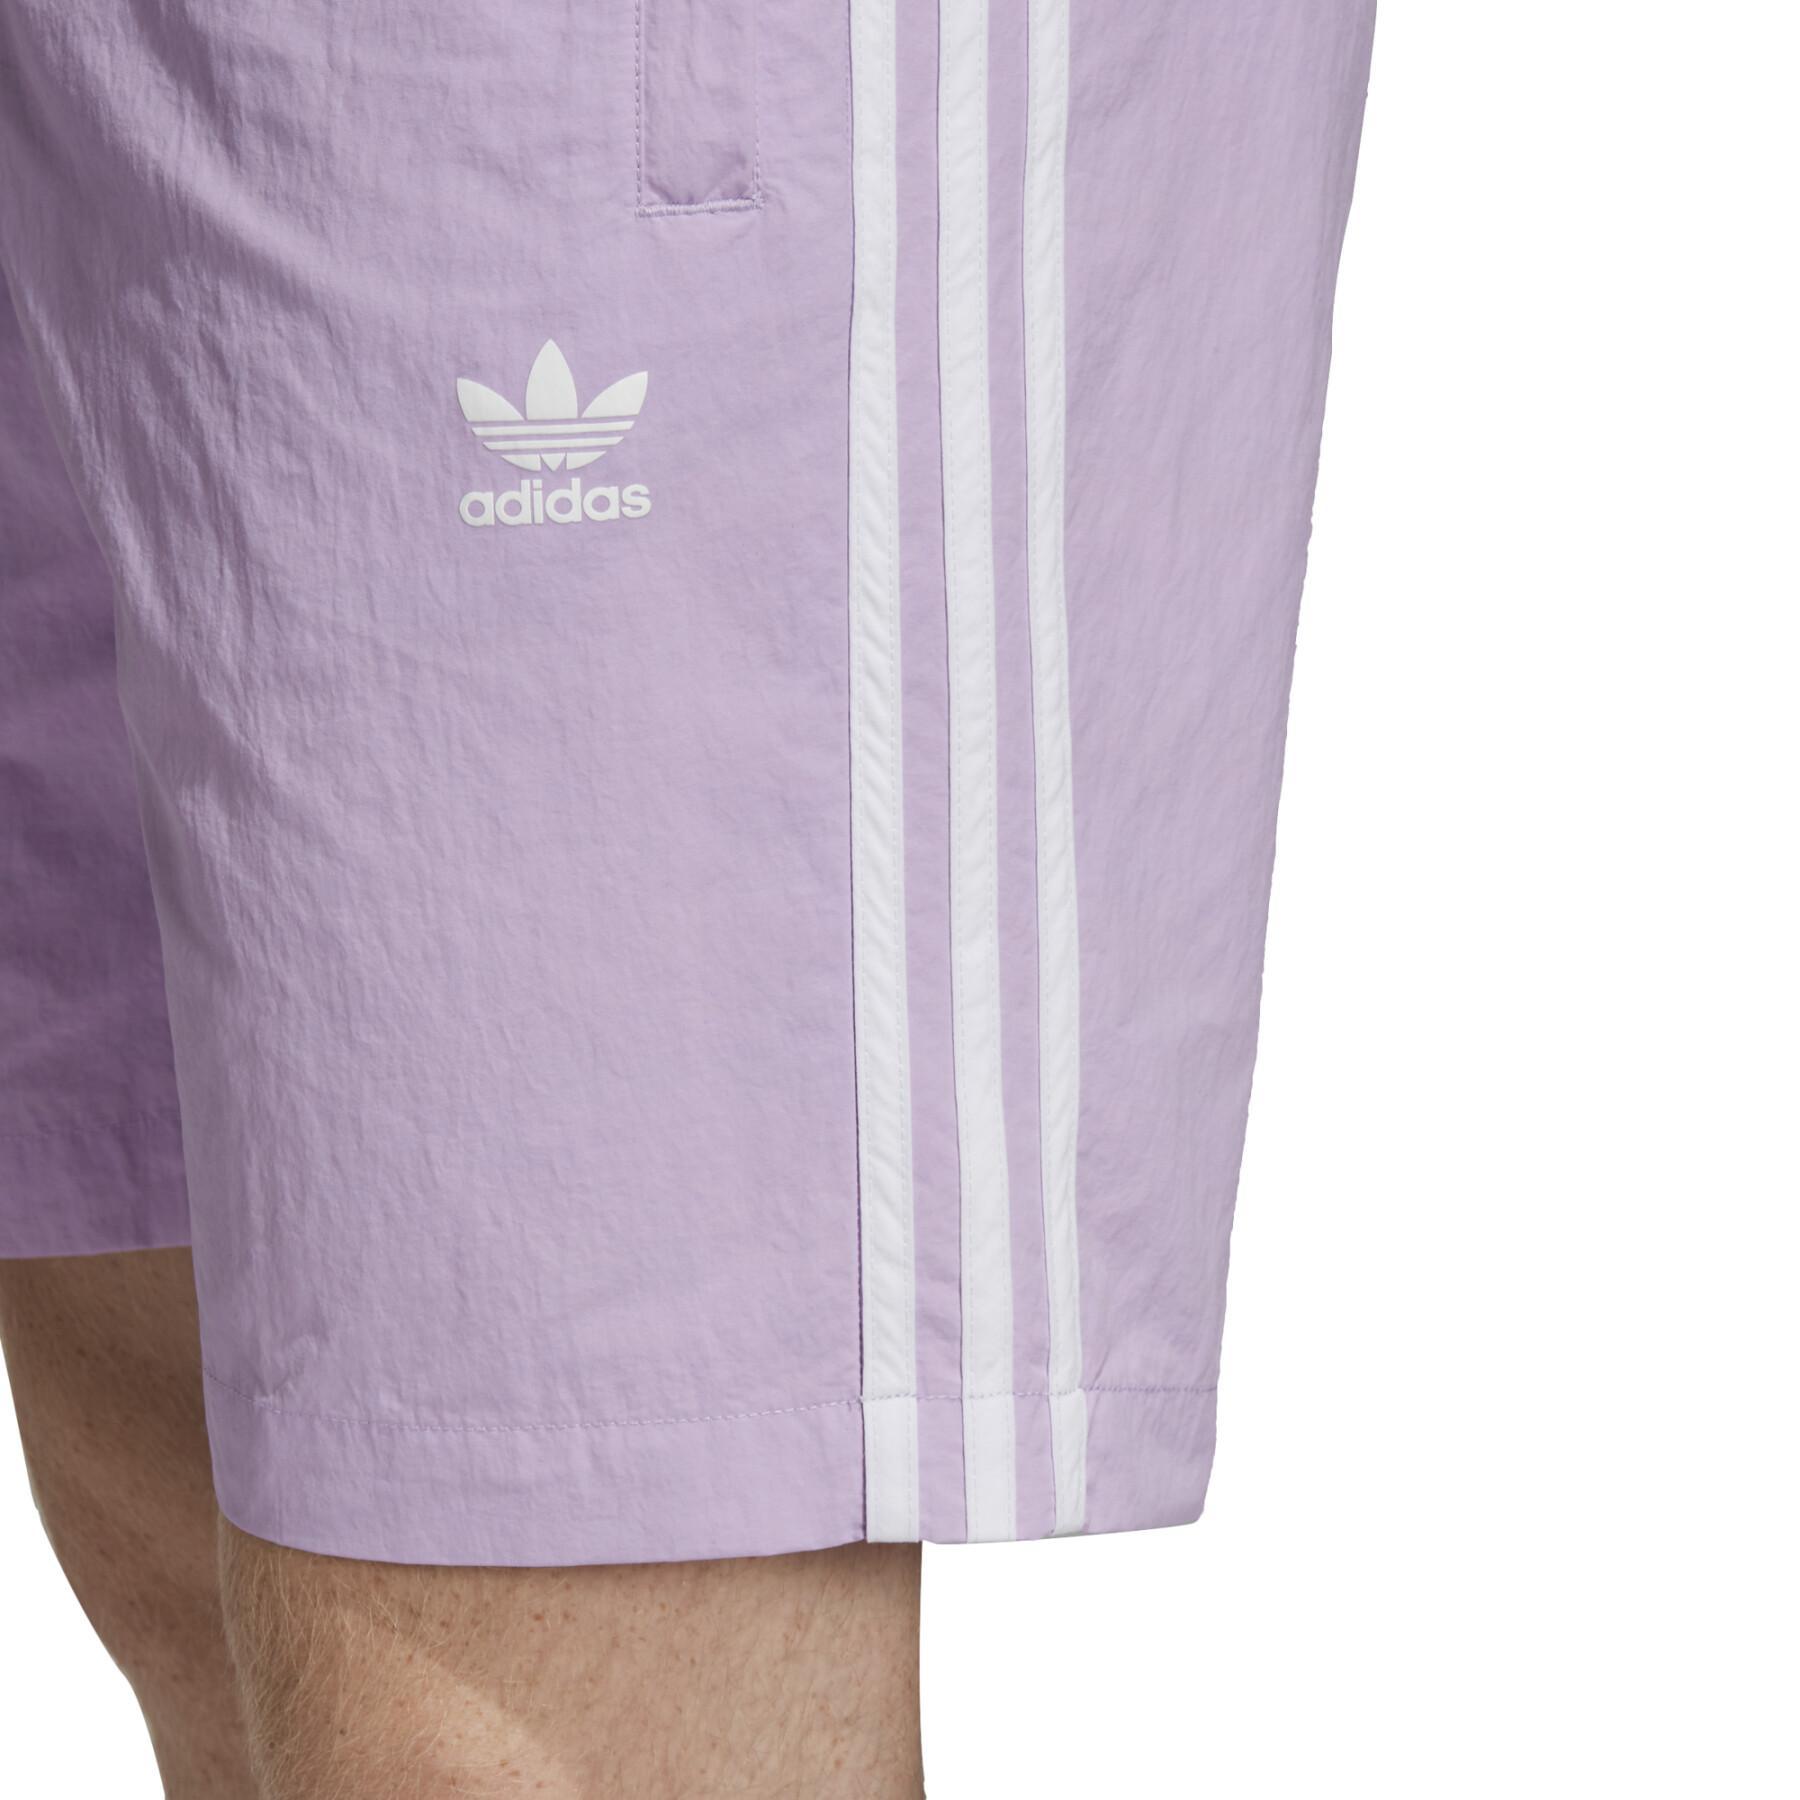 Swim shorts adidas 3-Stripes